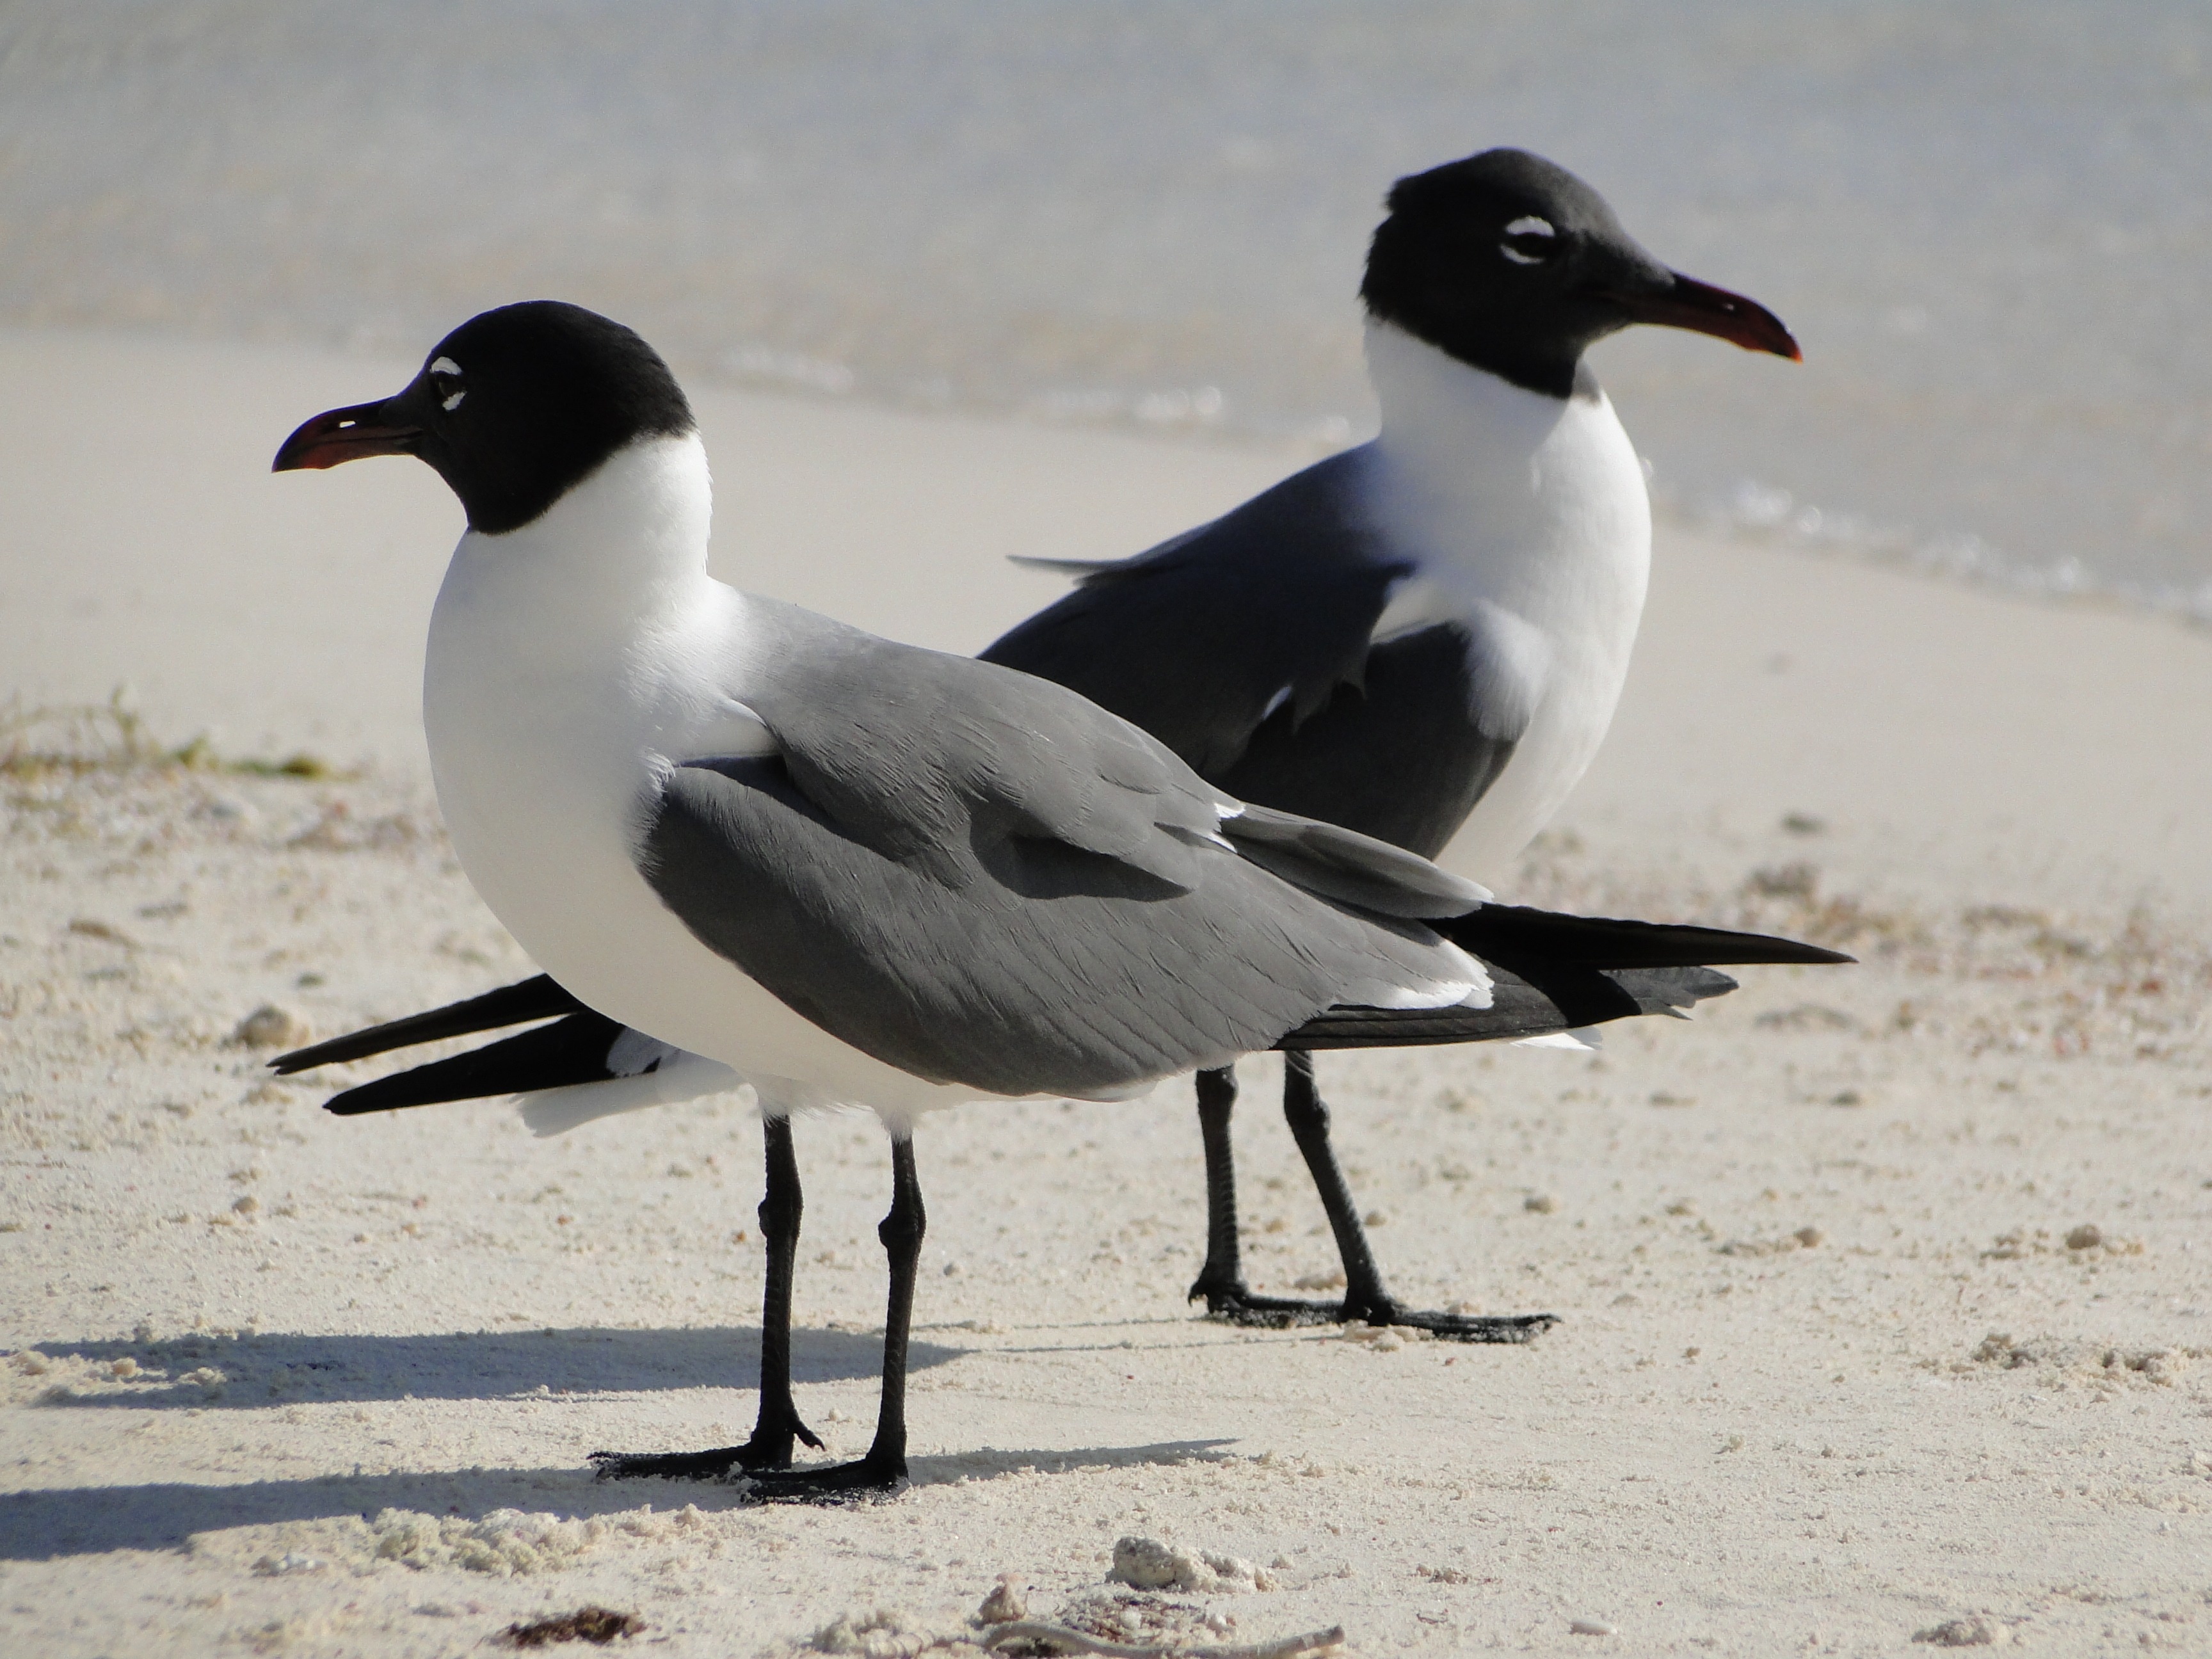 2 black and white seagulls